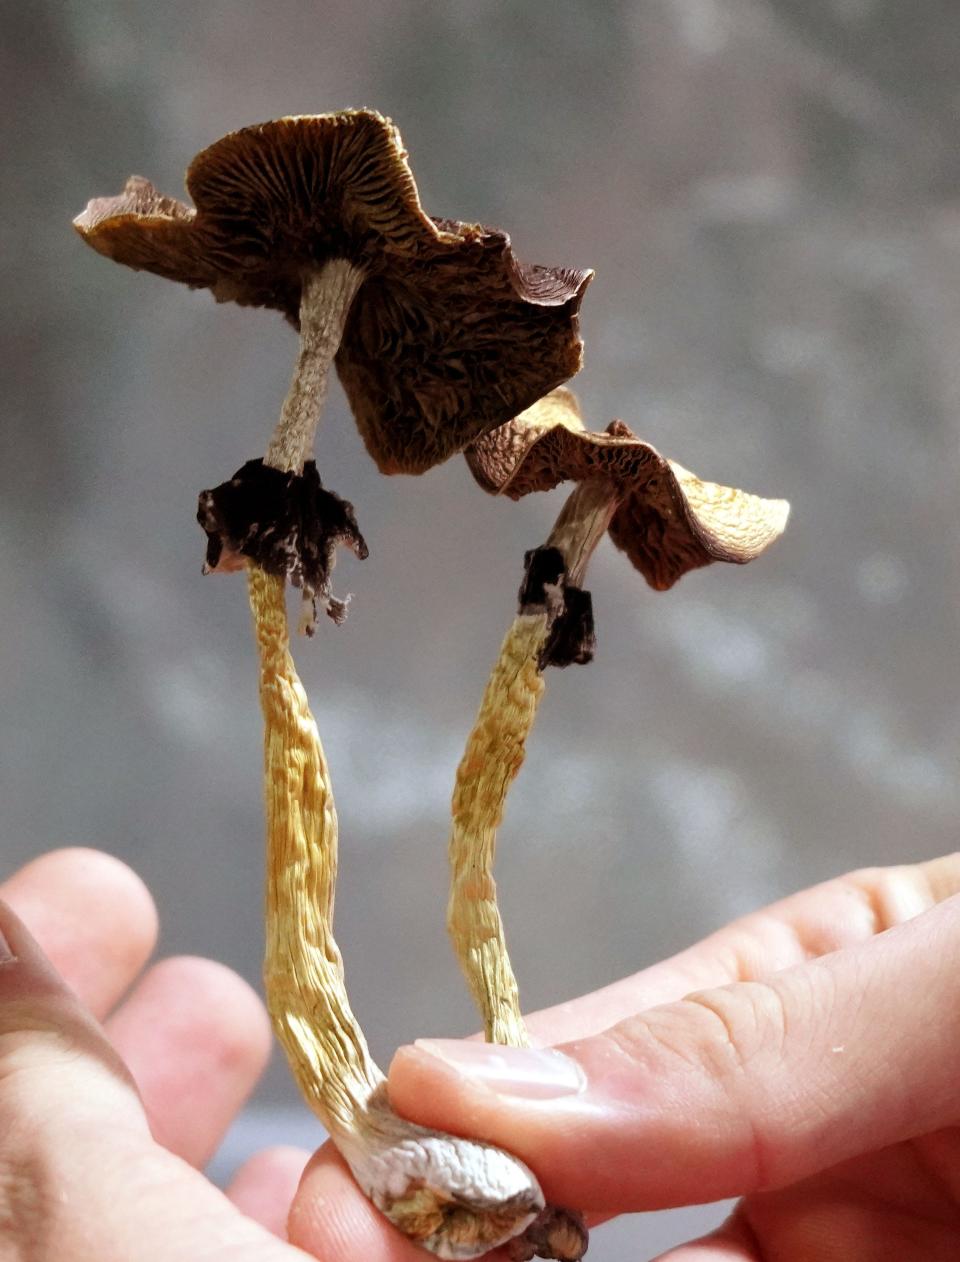 Psilocybin mushrooms or "magic mushrooms" displayed by a grower in Denver, Colorado.